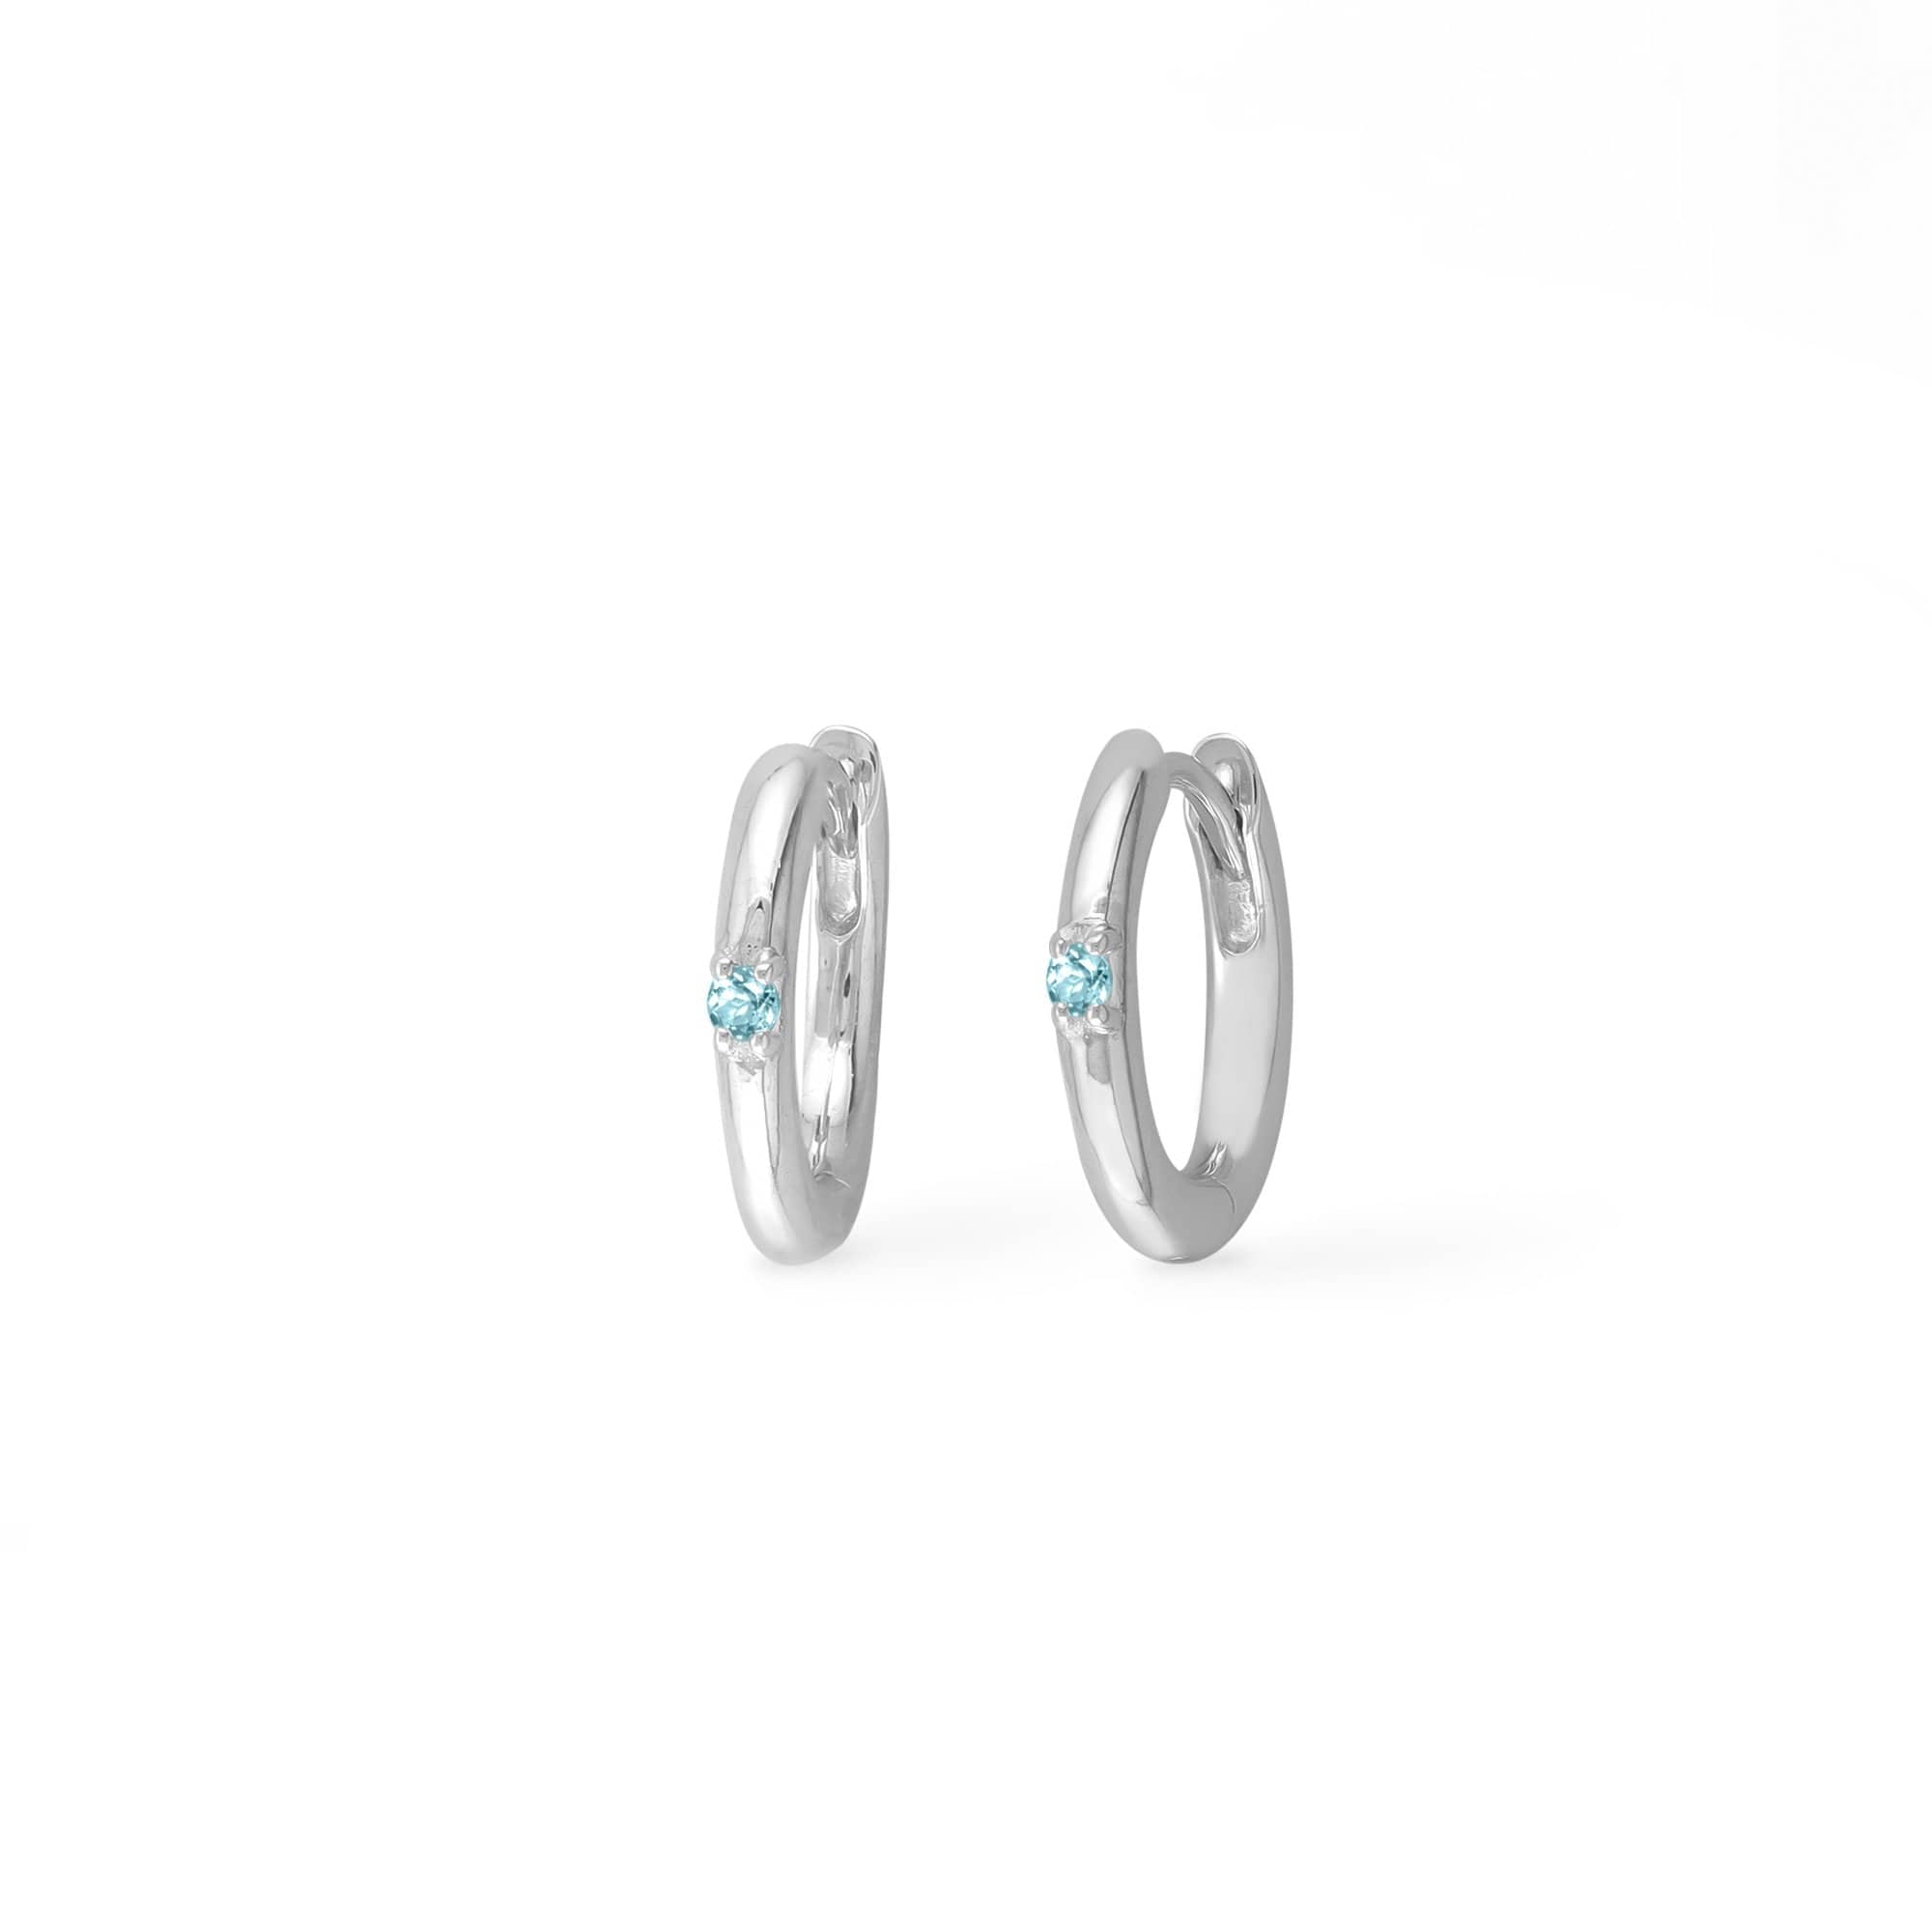 Boma Jewelry Earrings Blue Topaz Huggie Hoops with Gemstone